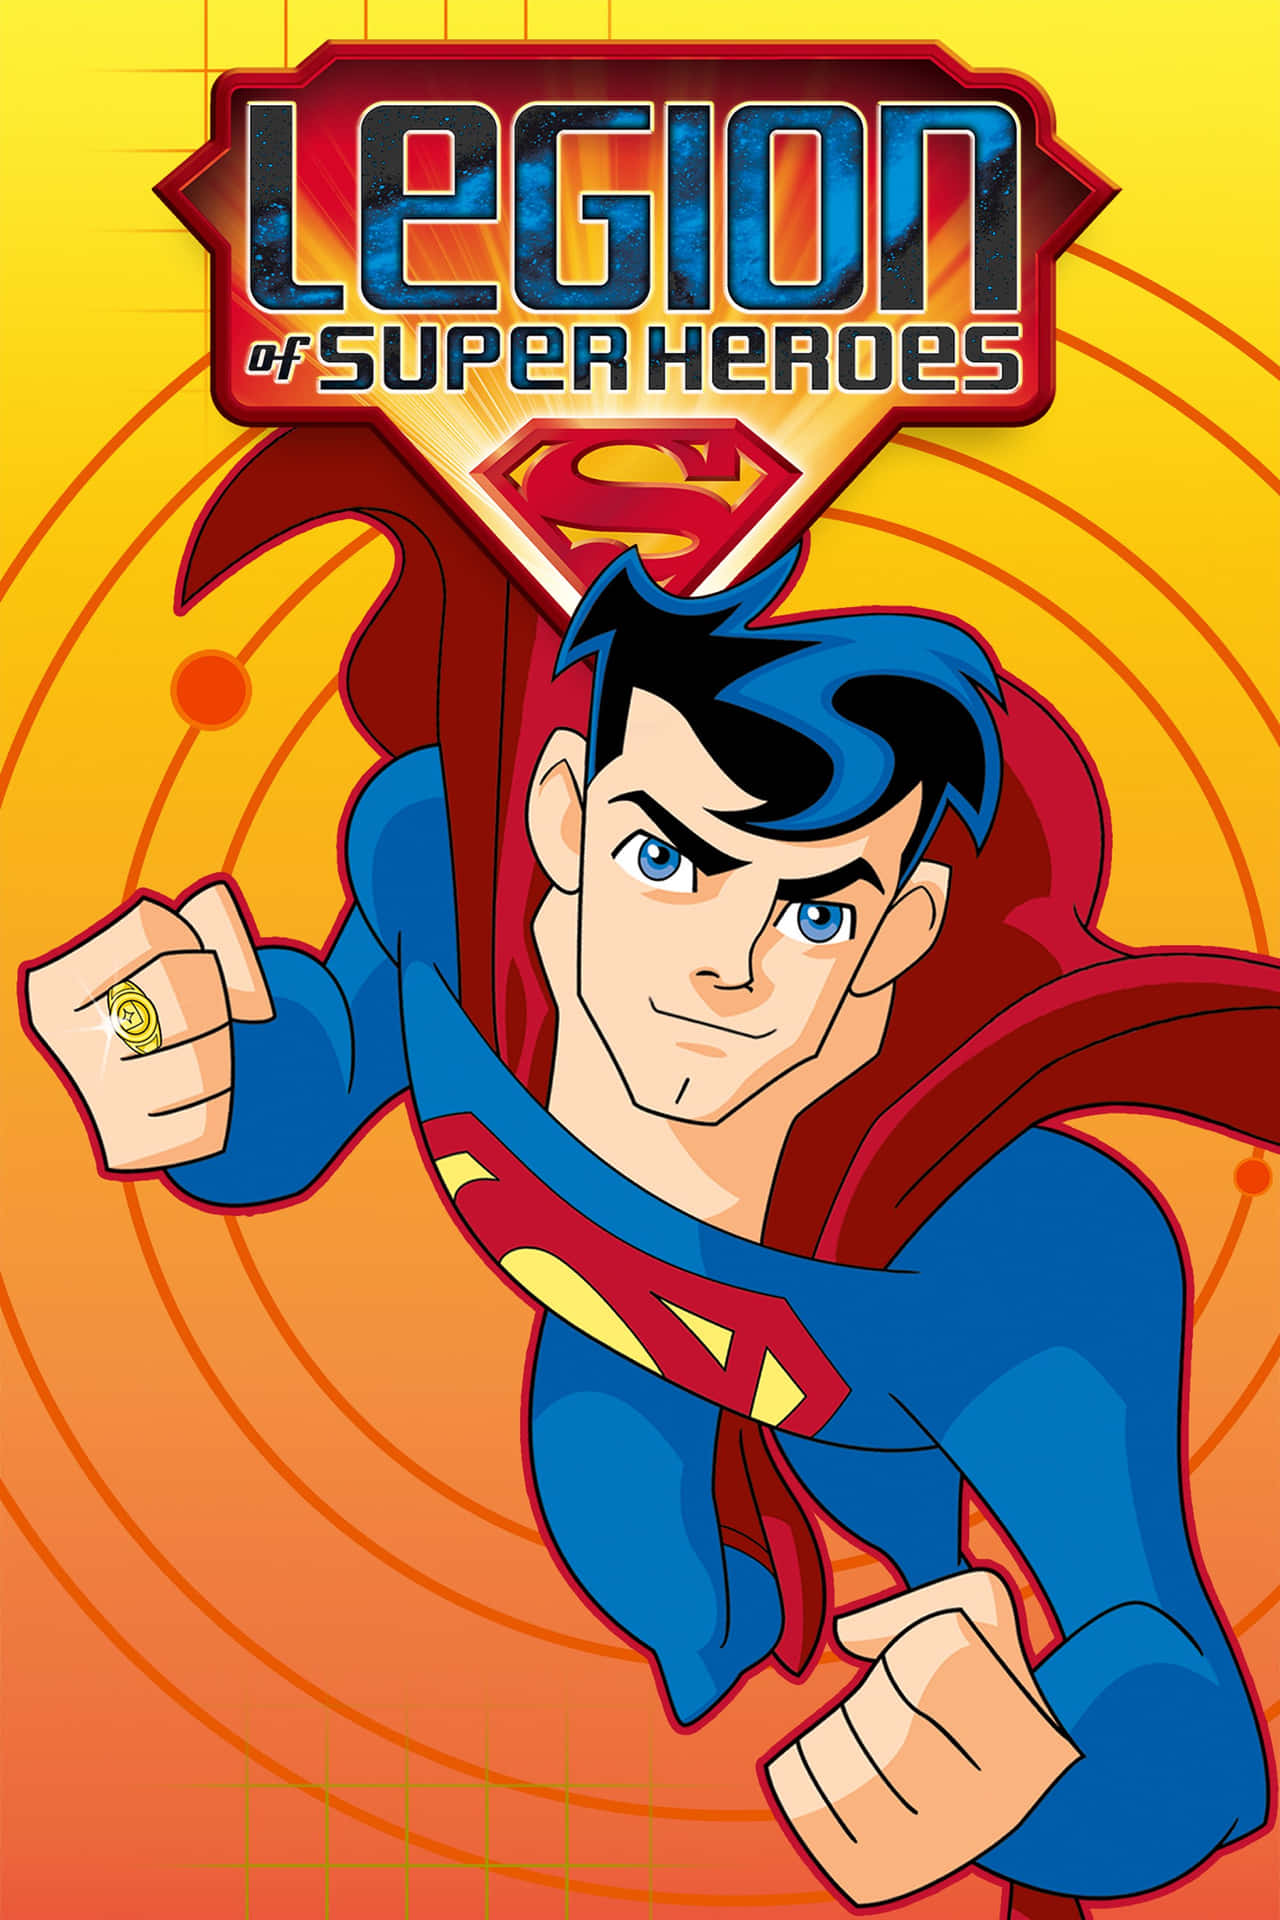 Download Superman Poster Legion Of Super Heroes Wallpaper | Wallpapers.com